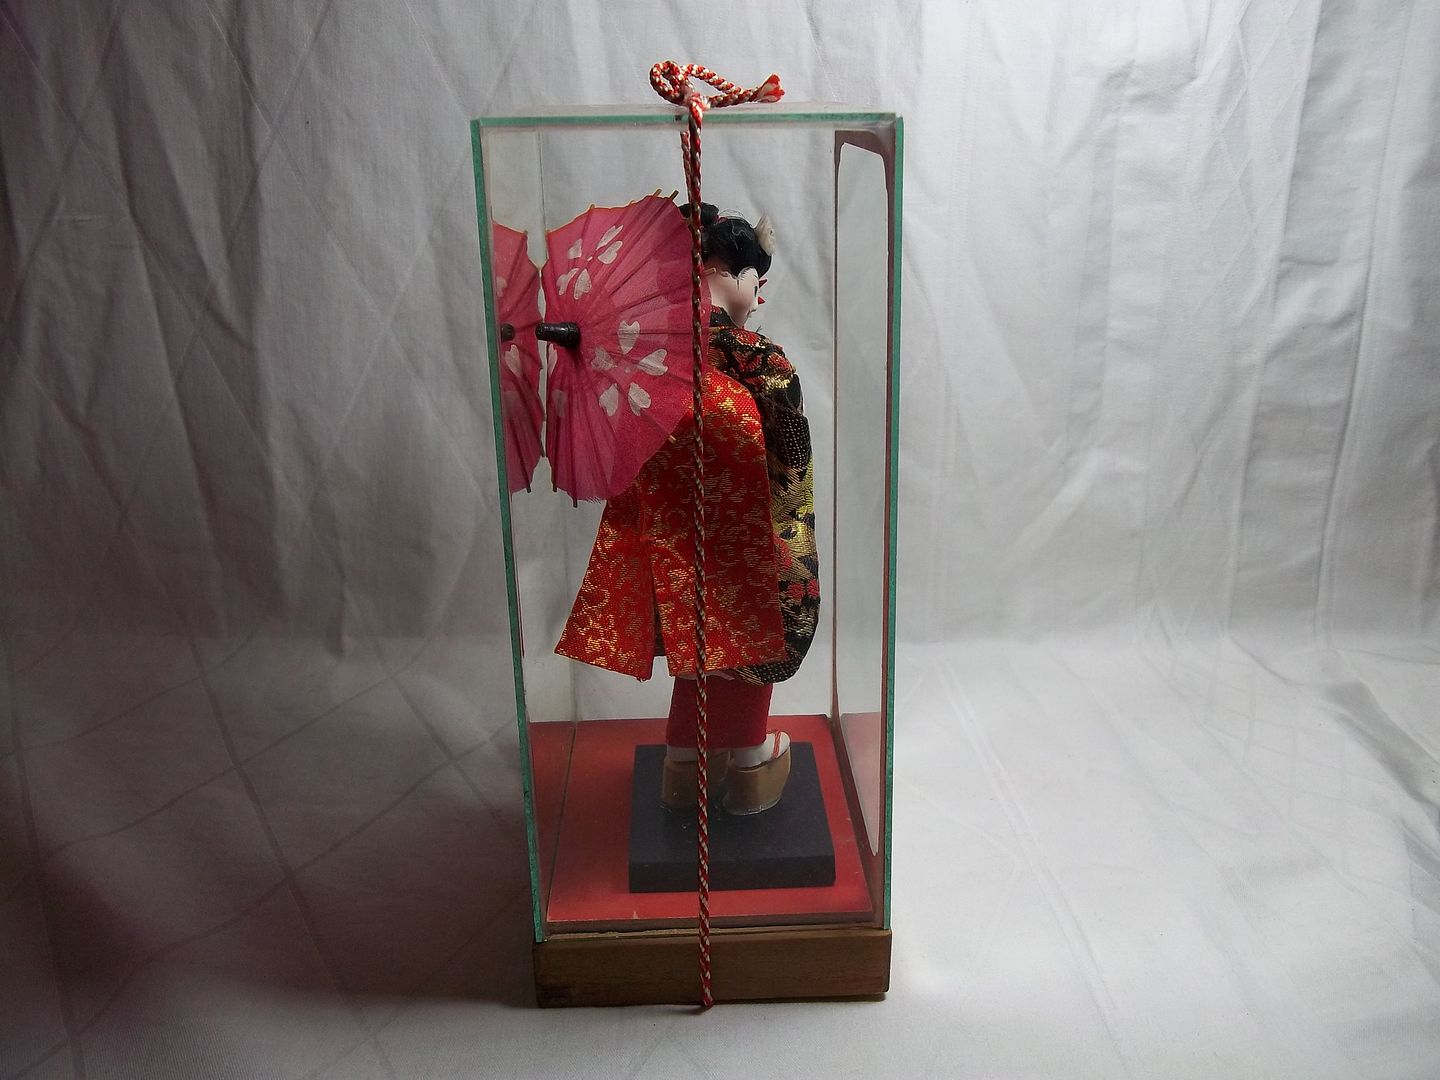 Vintage Japanese Geisha Doll In Glass Display Case Mirrored Shadow Box